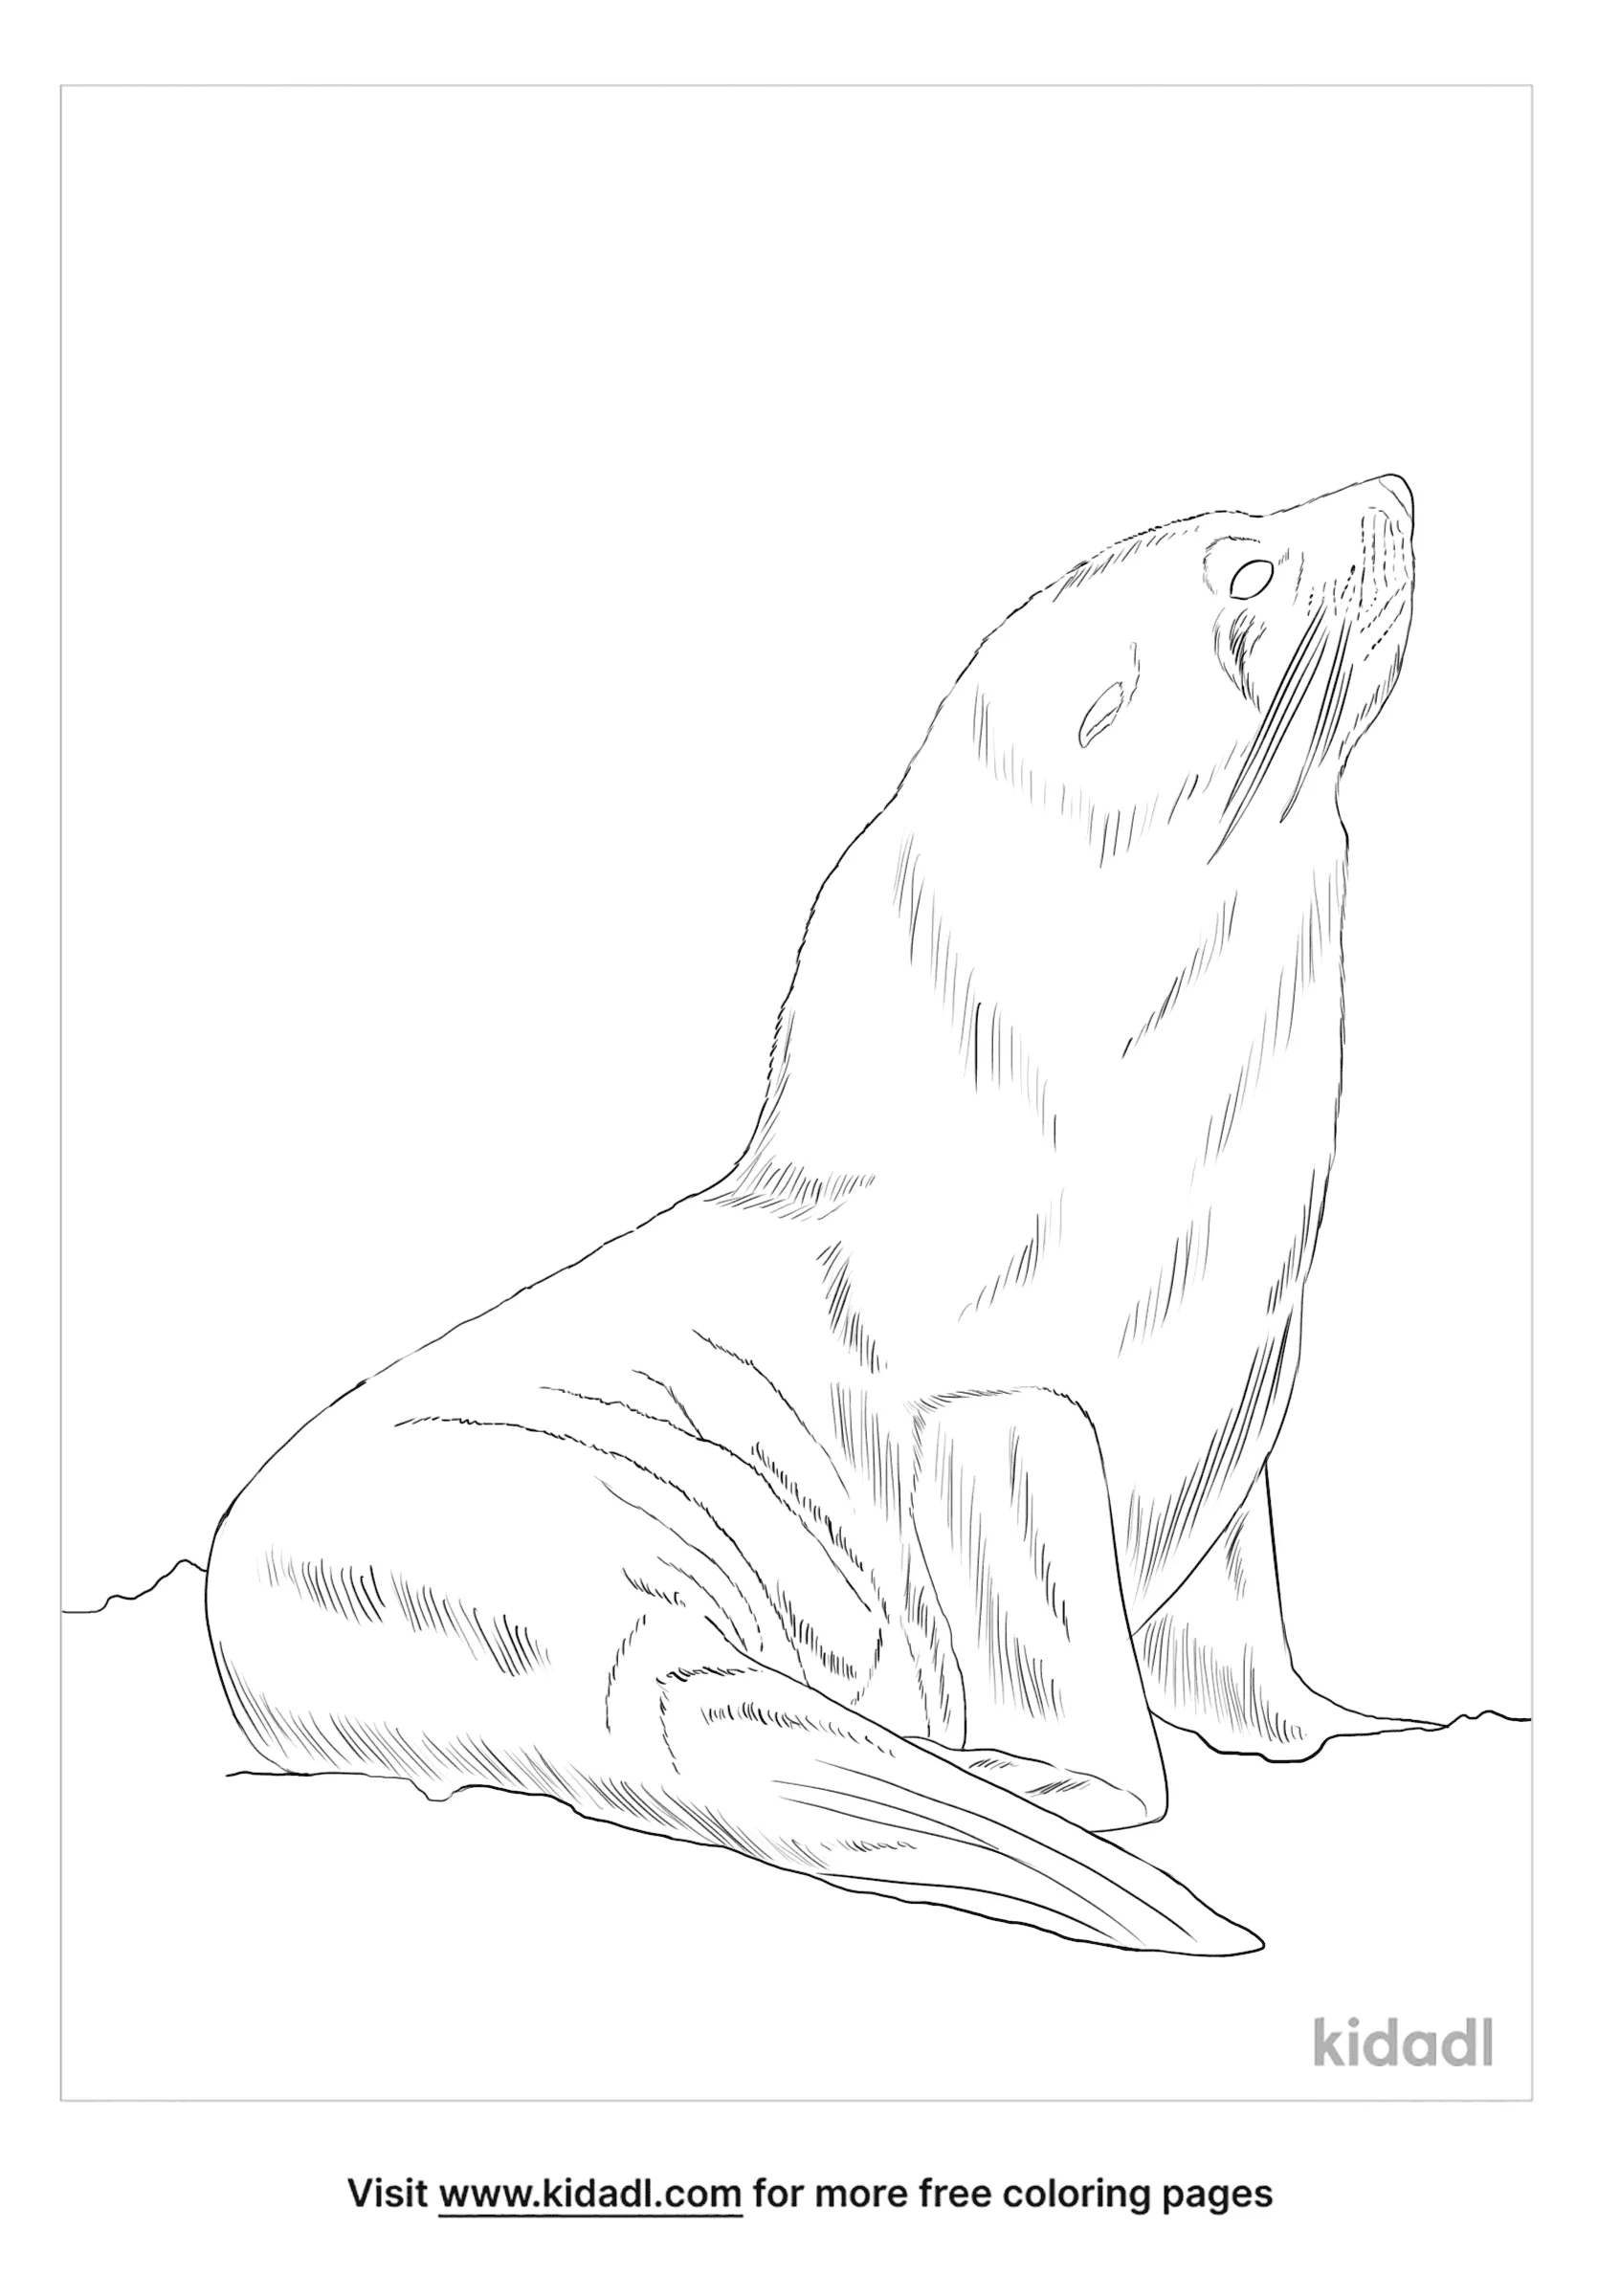 Subantarctic Fur Seal Coloring Page